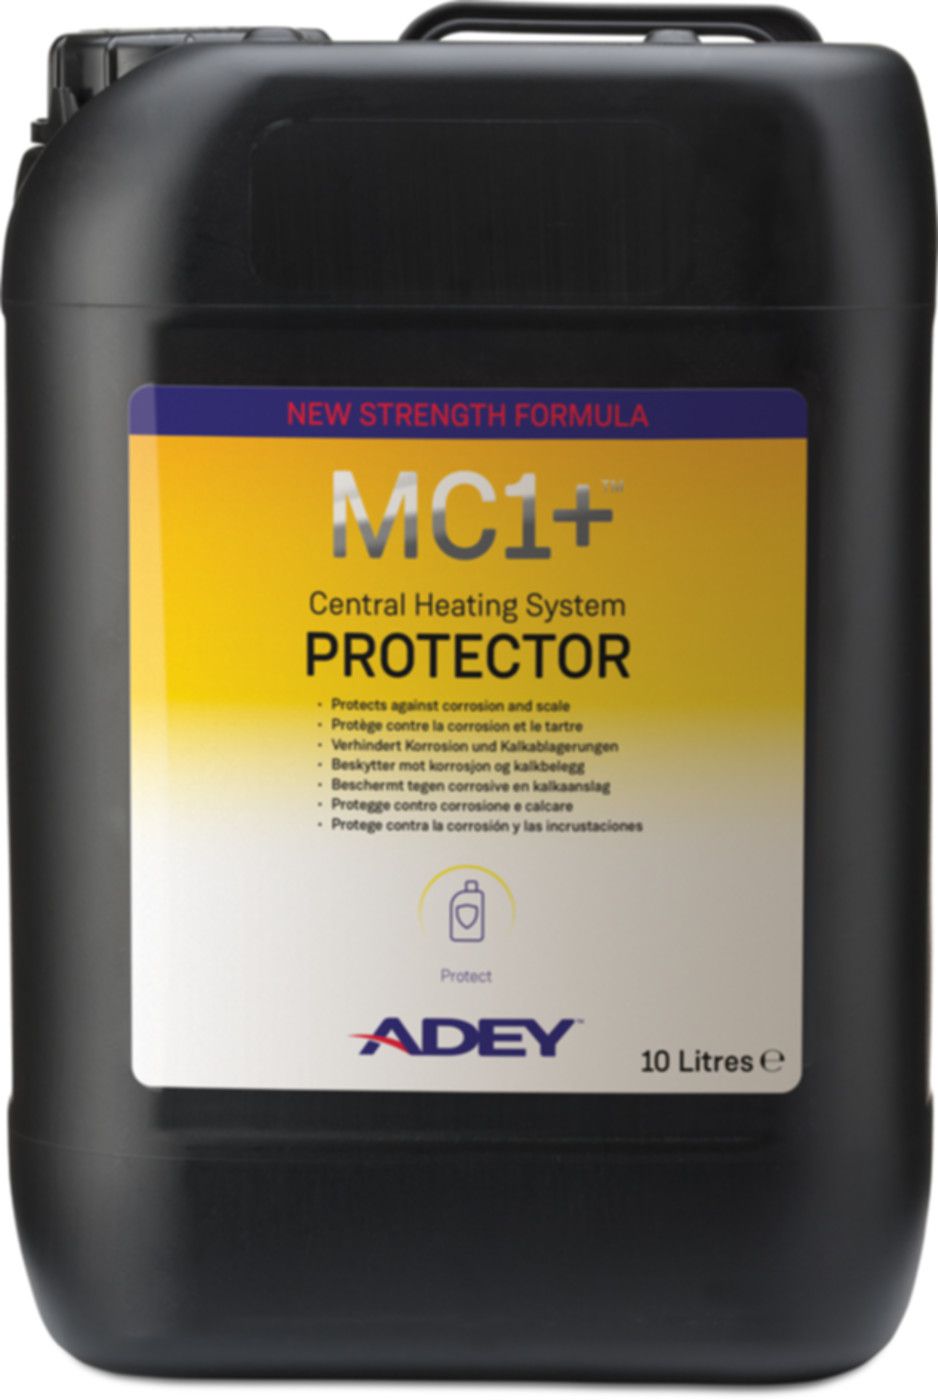 Heizungsschutzmittel ADEY Protector MC1+ 10 l Kanister - Heizungswasseraufbereitung